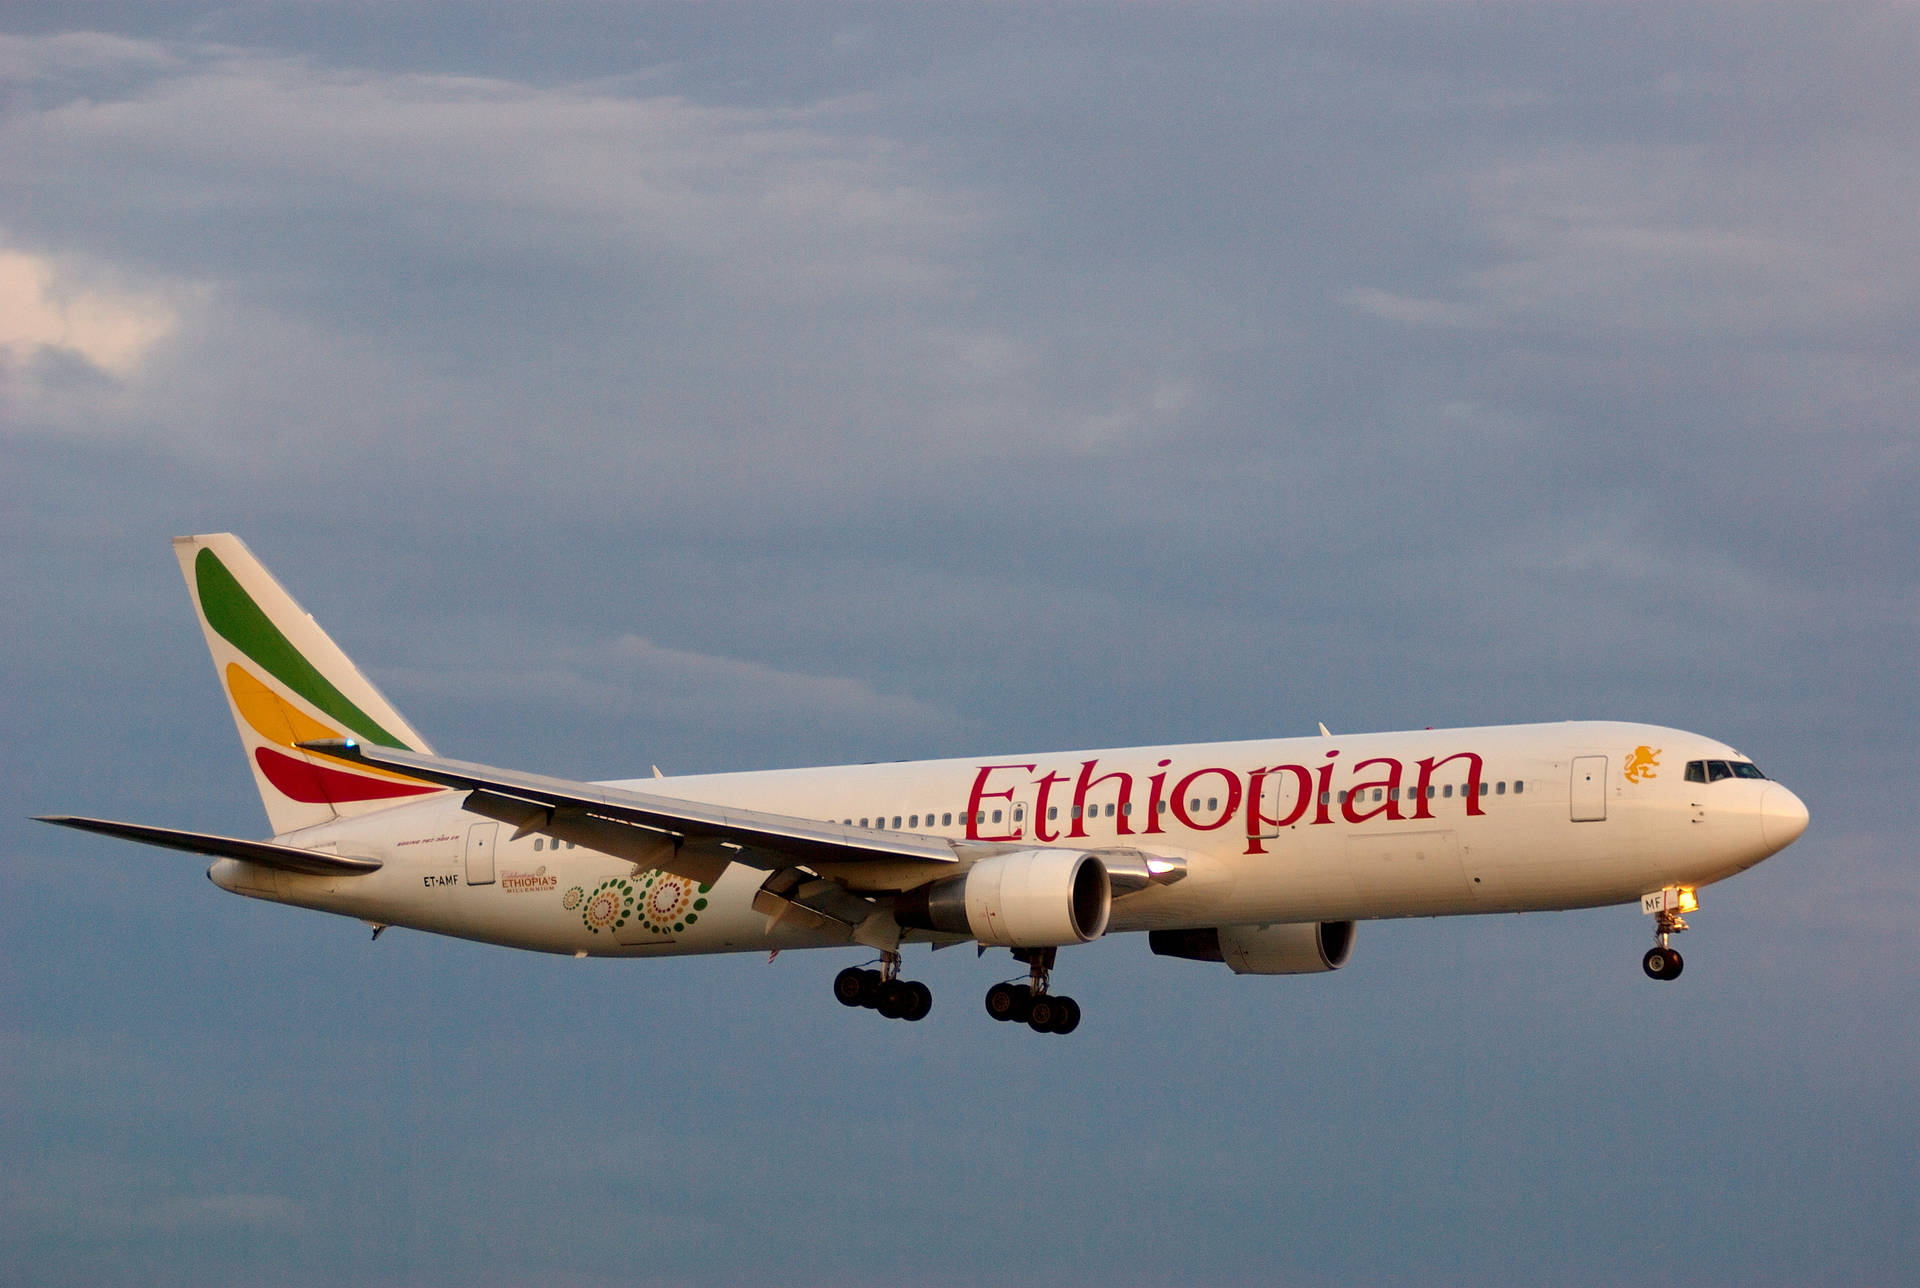 Ethiopian Airlines Bakgrund